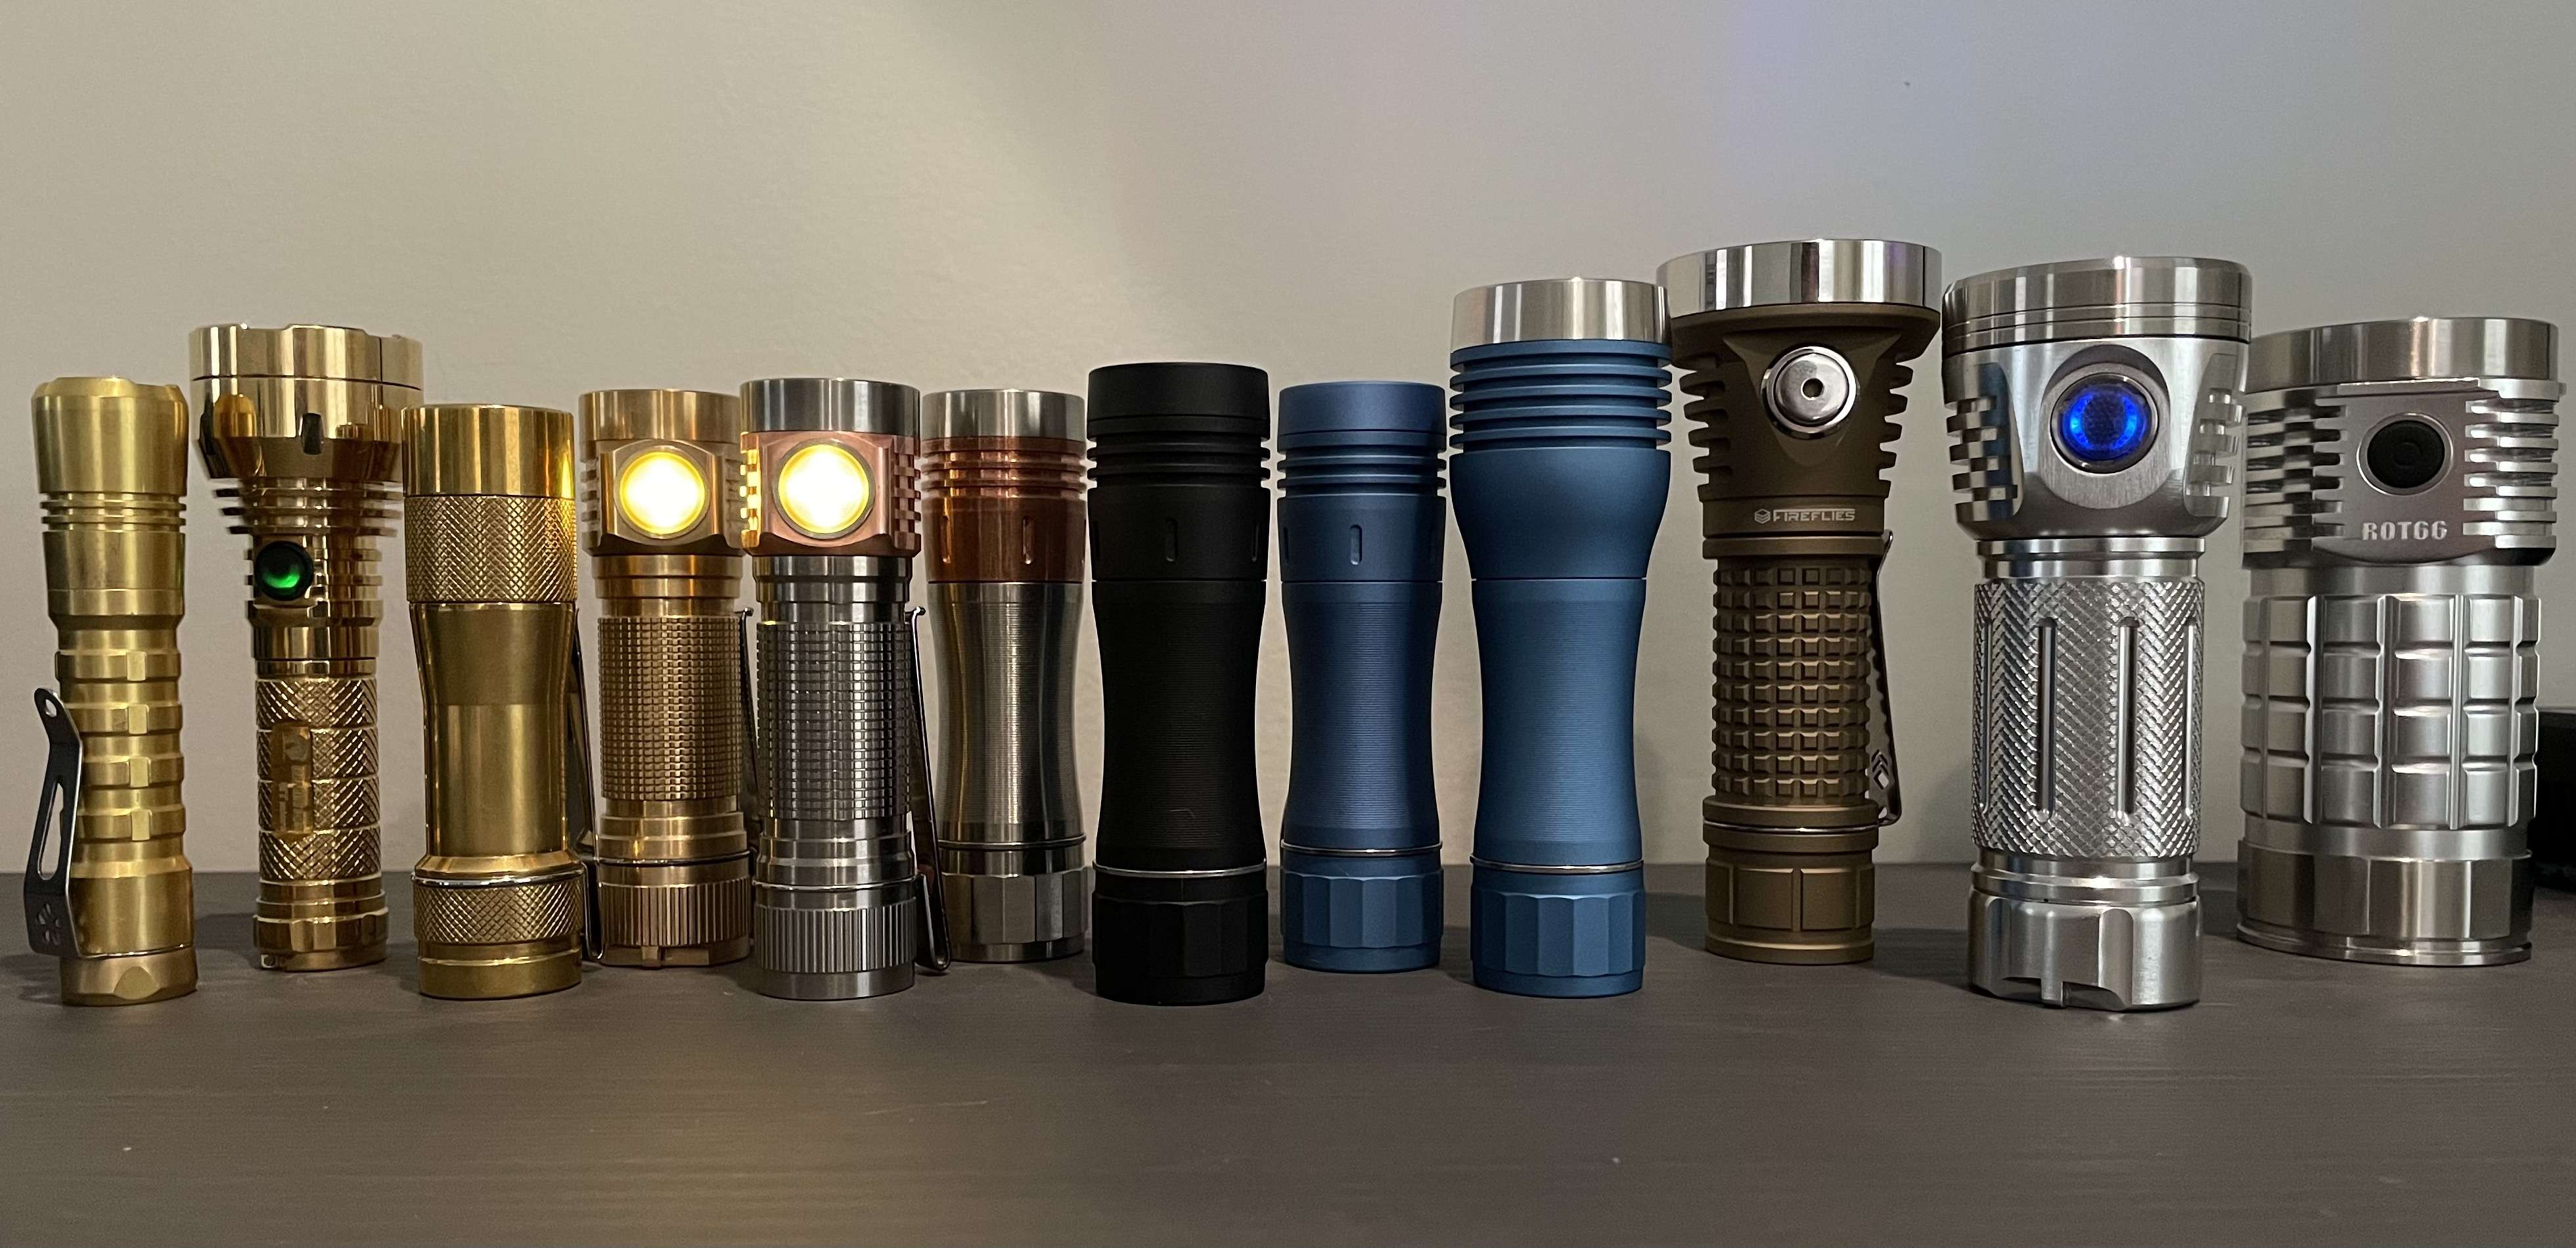 The BIG flashlight collection thread - List your flashlight 